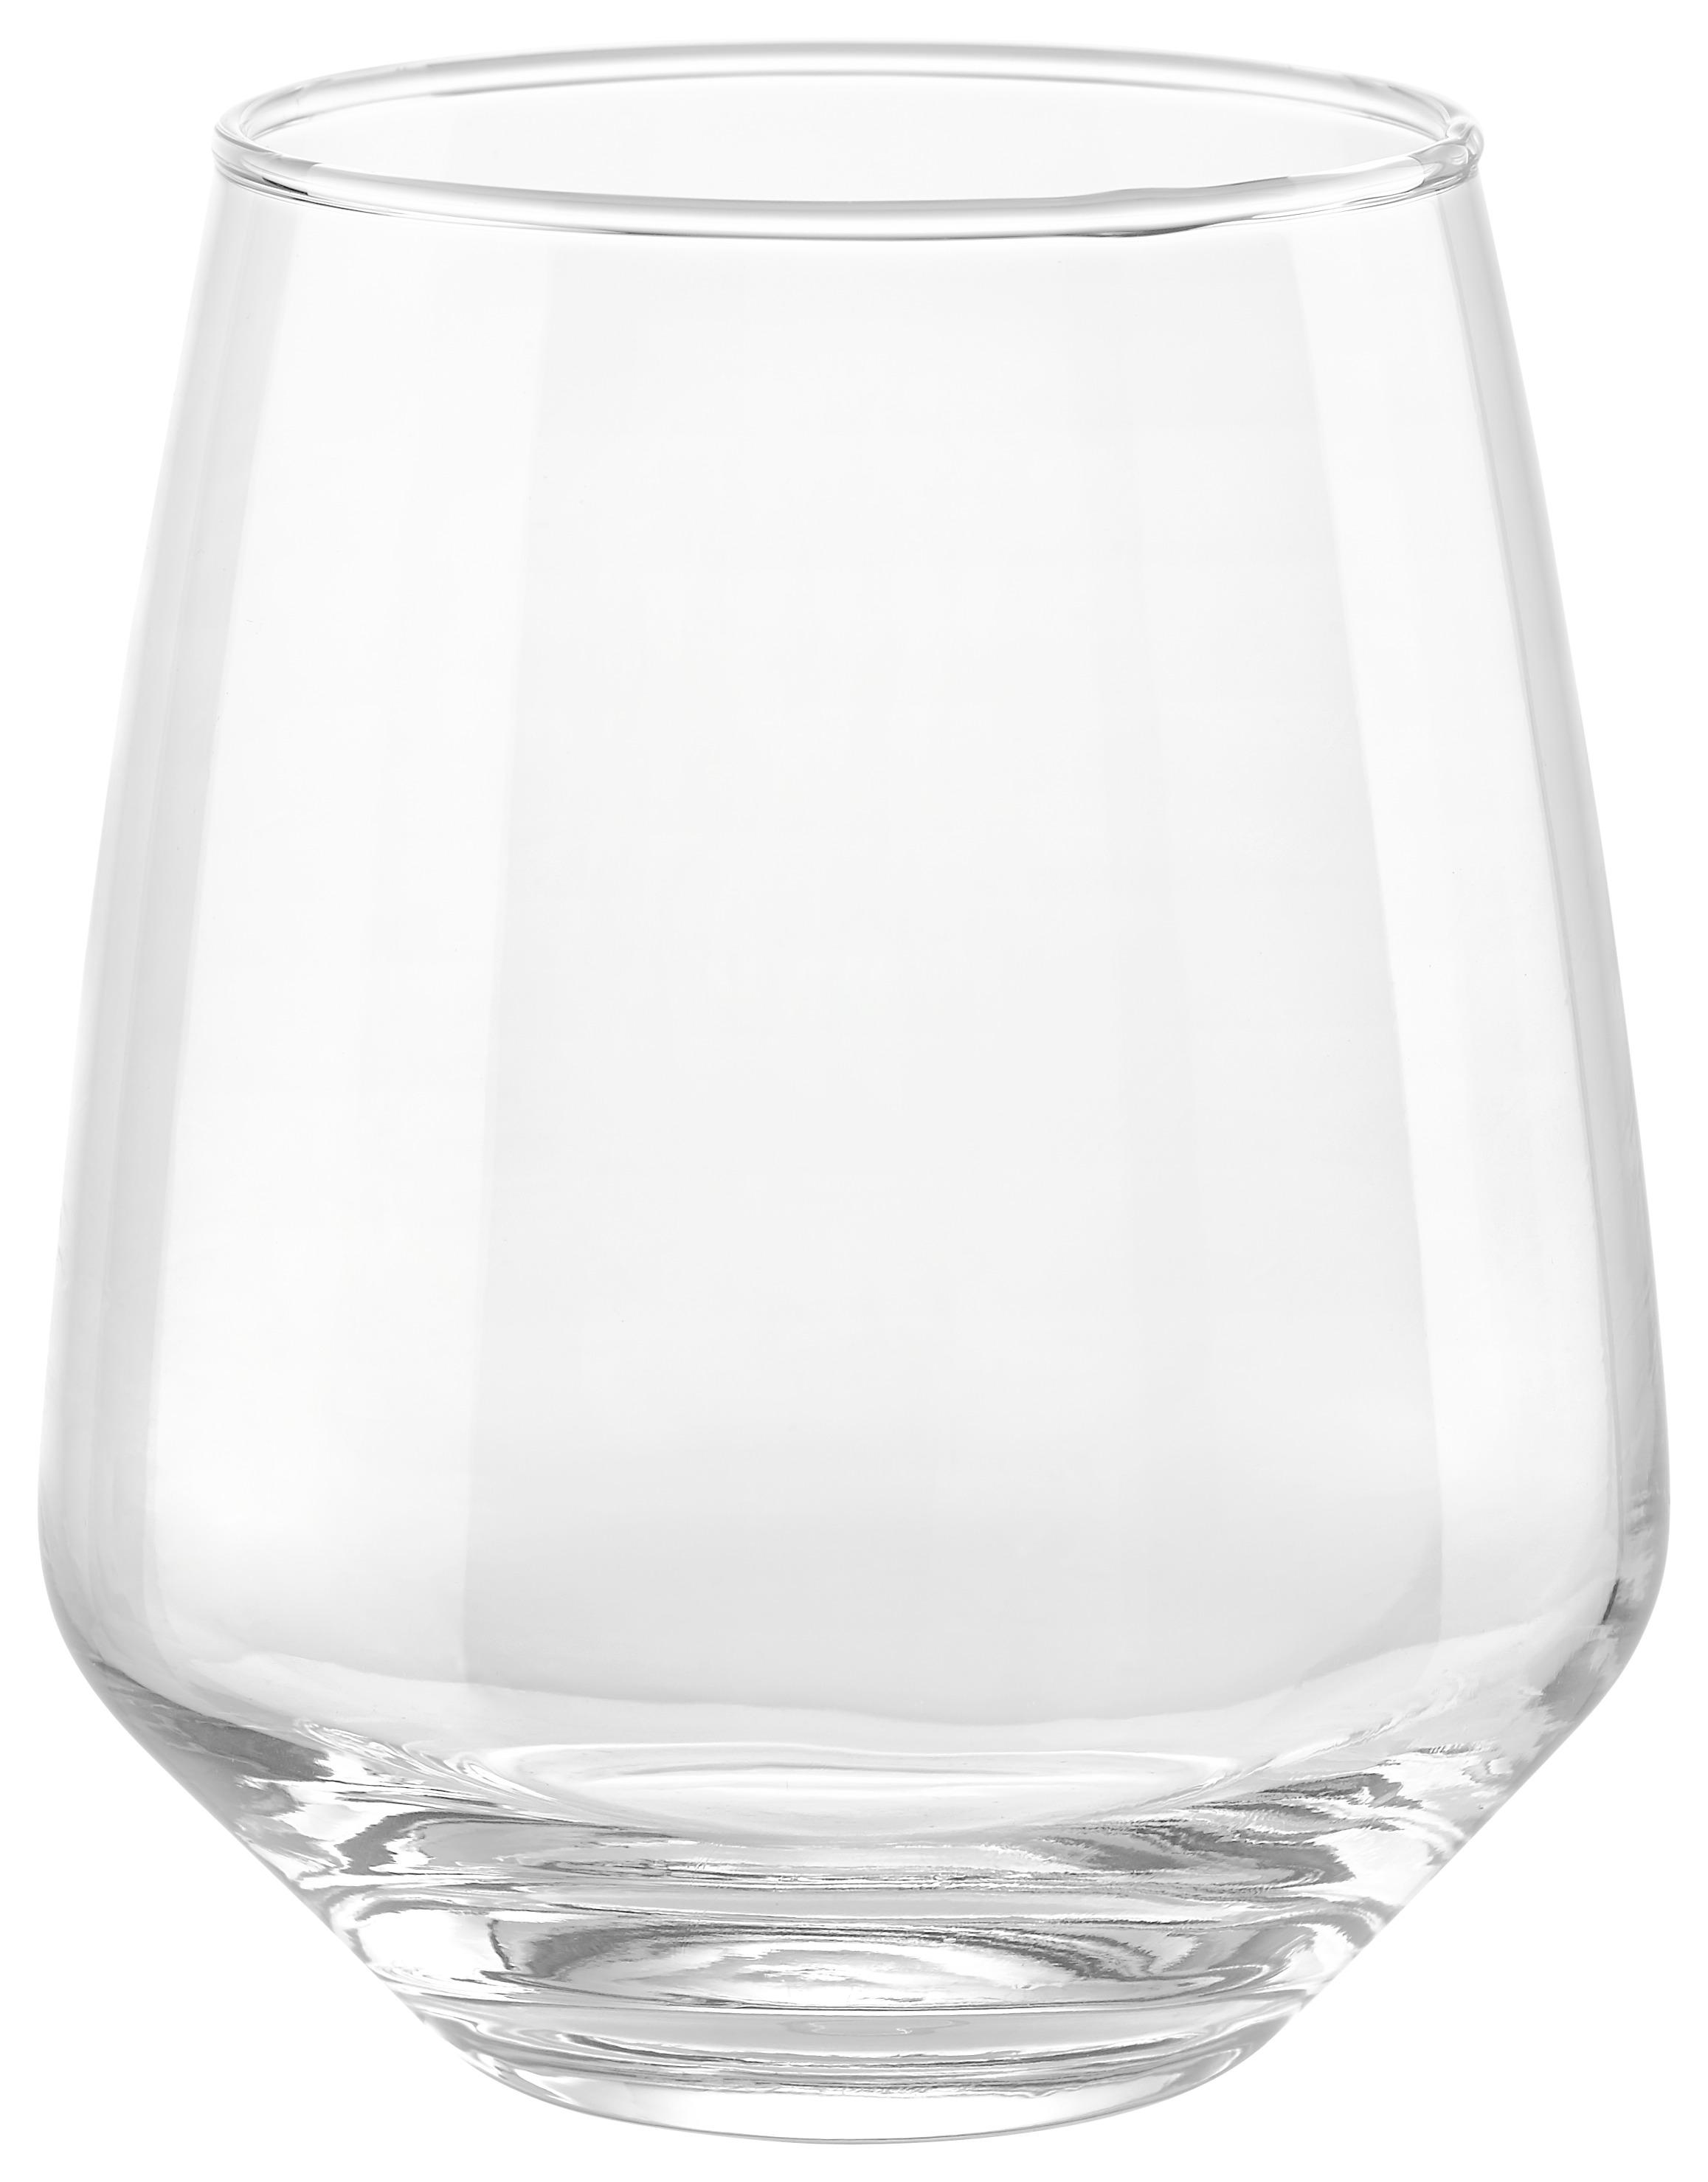 Trinkglas Siena ca. 400ml - Klar, MODERN, Glas (10/10,6cm) - Modern Living